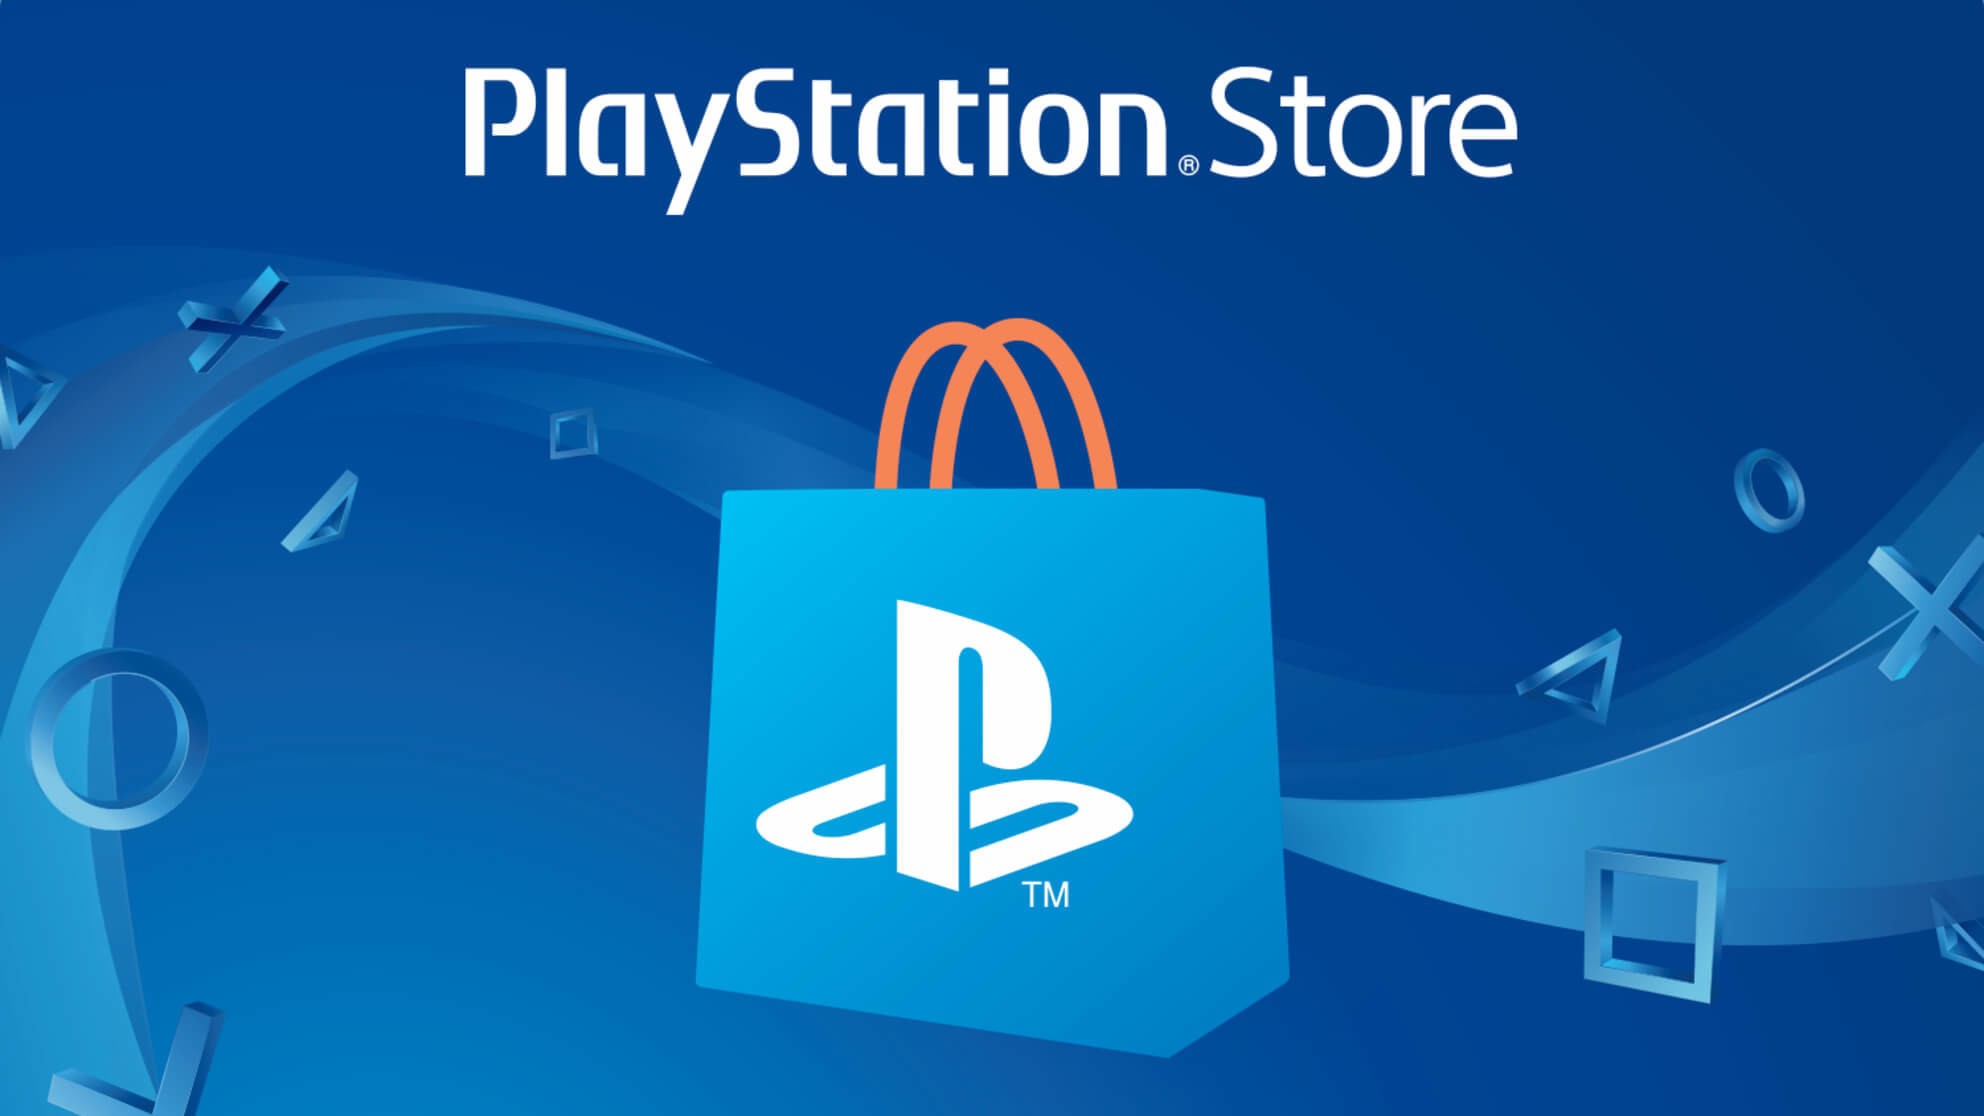 Playstation store turkey сайт. Sony PLAYSTATION Store. Логотип PLAYSTATION Store. Турецкий PS Store. Магазин PLAYSTATION Store.